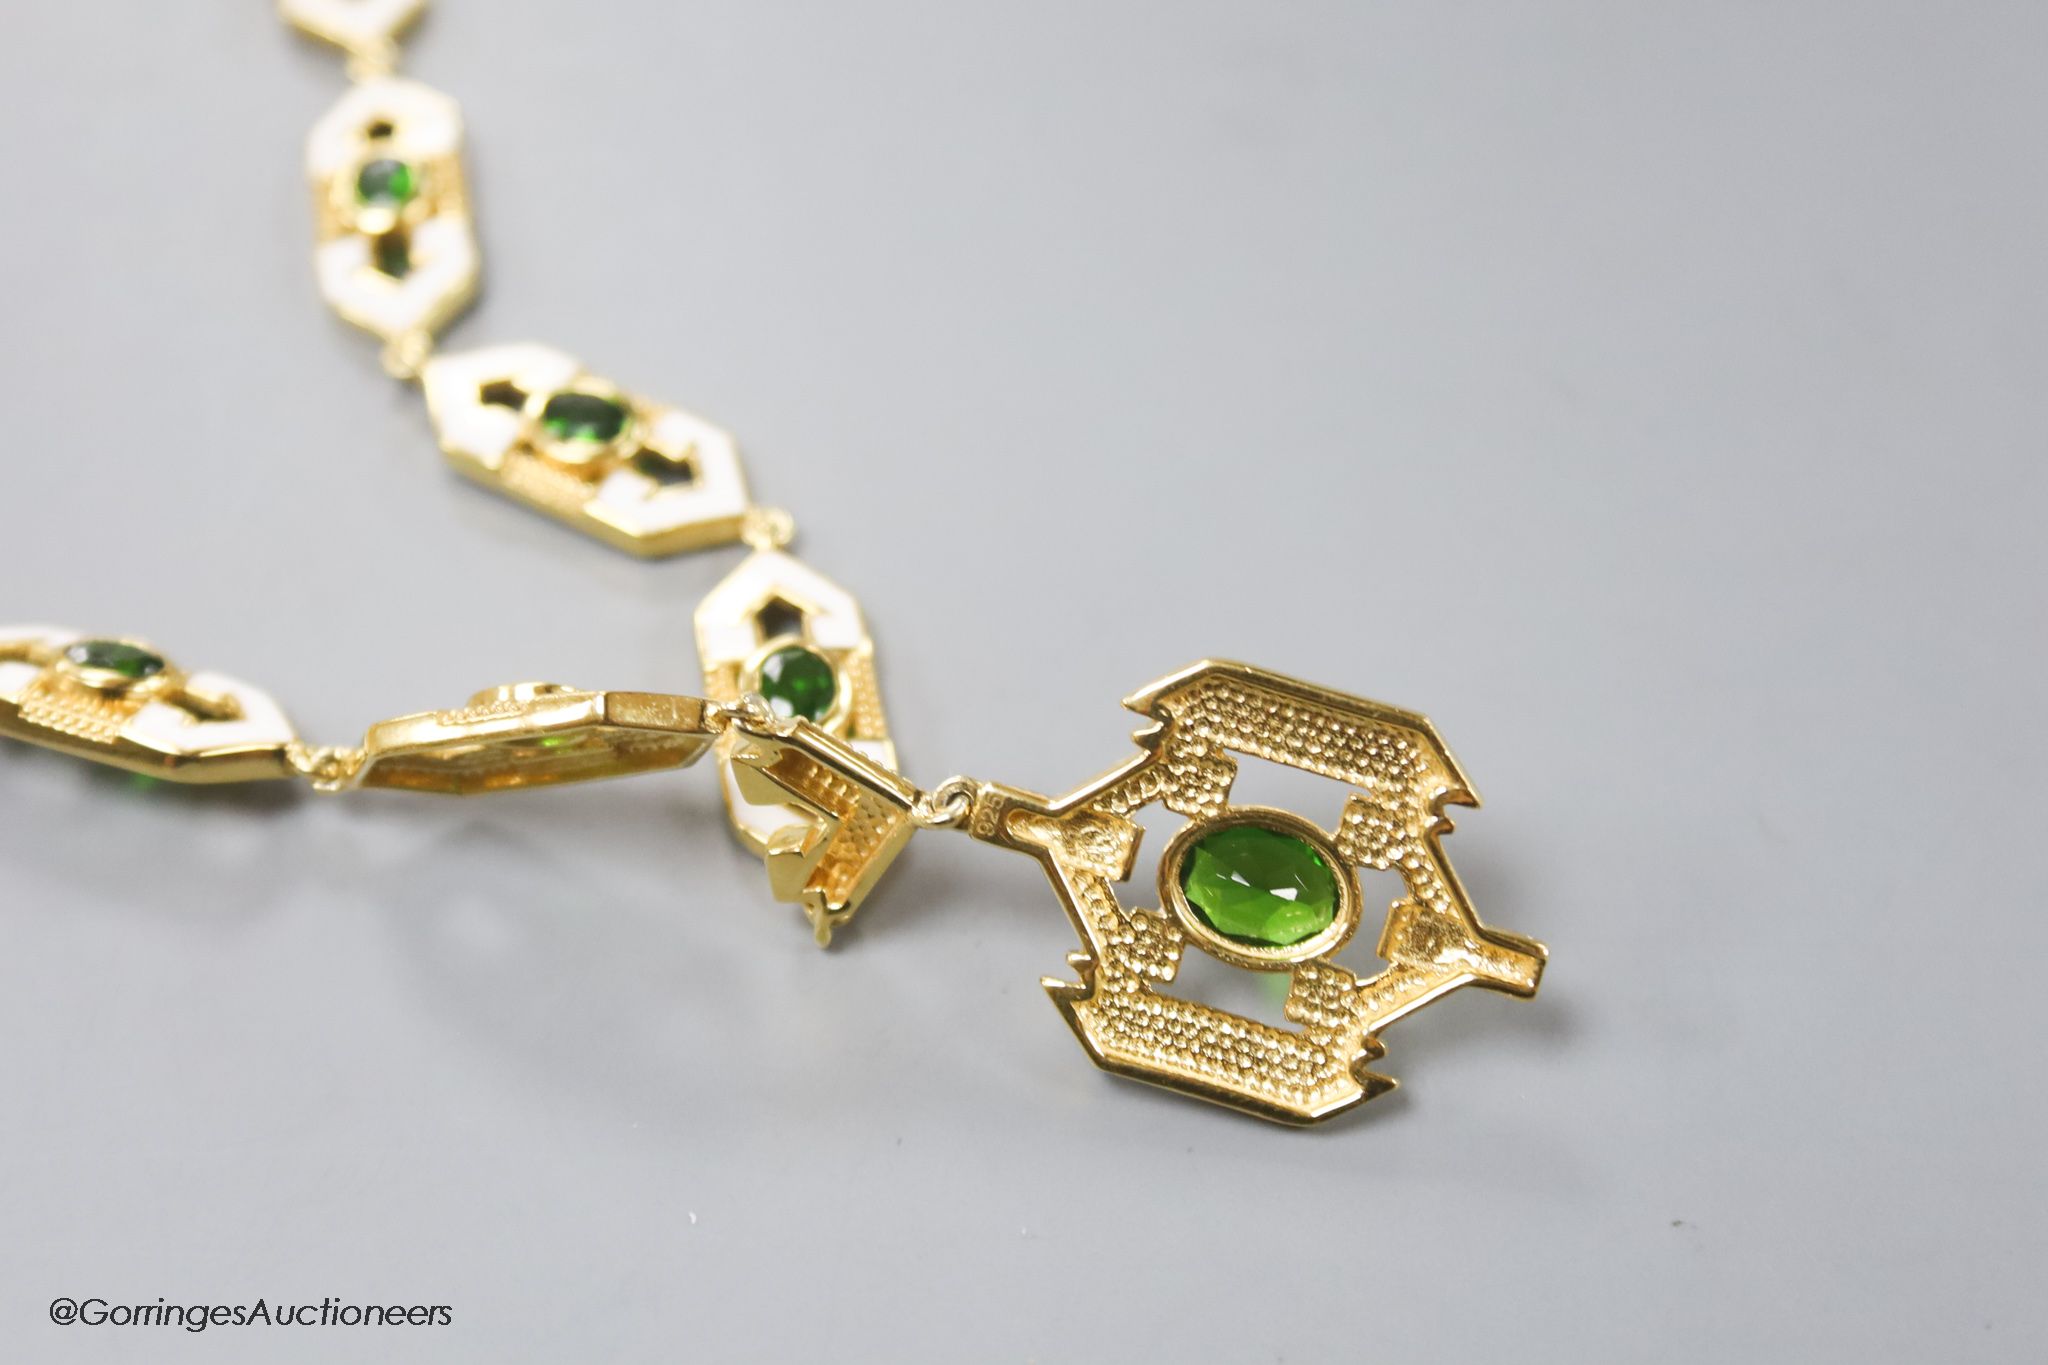 A modern stylish 925 gilt white metal, green paste and enamel set necklace, 50cm